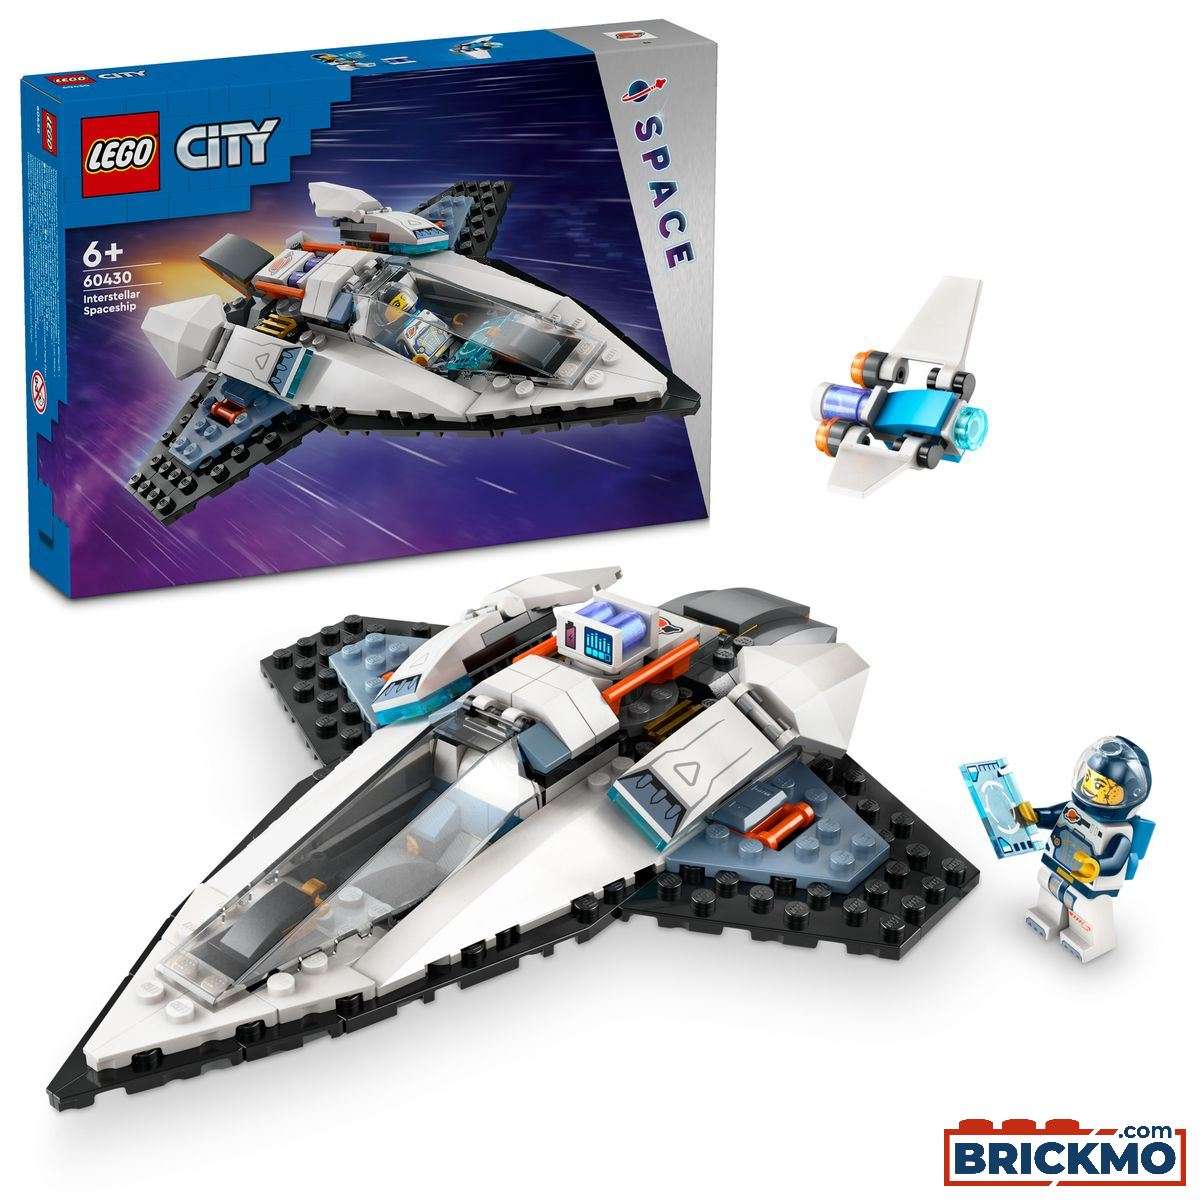 LEGO City 60430 Intergalaktisk rumskib 60430